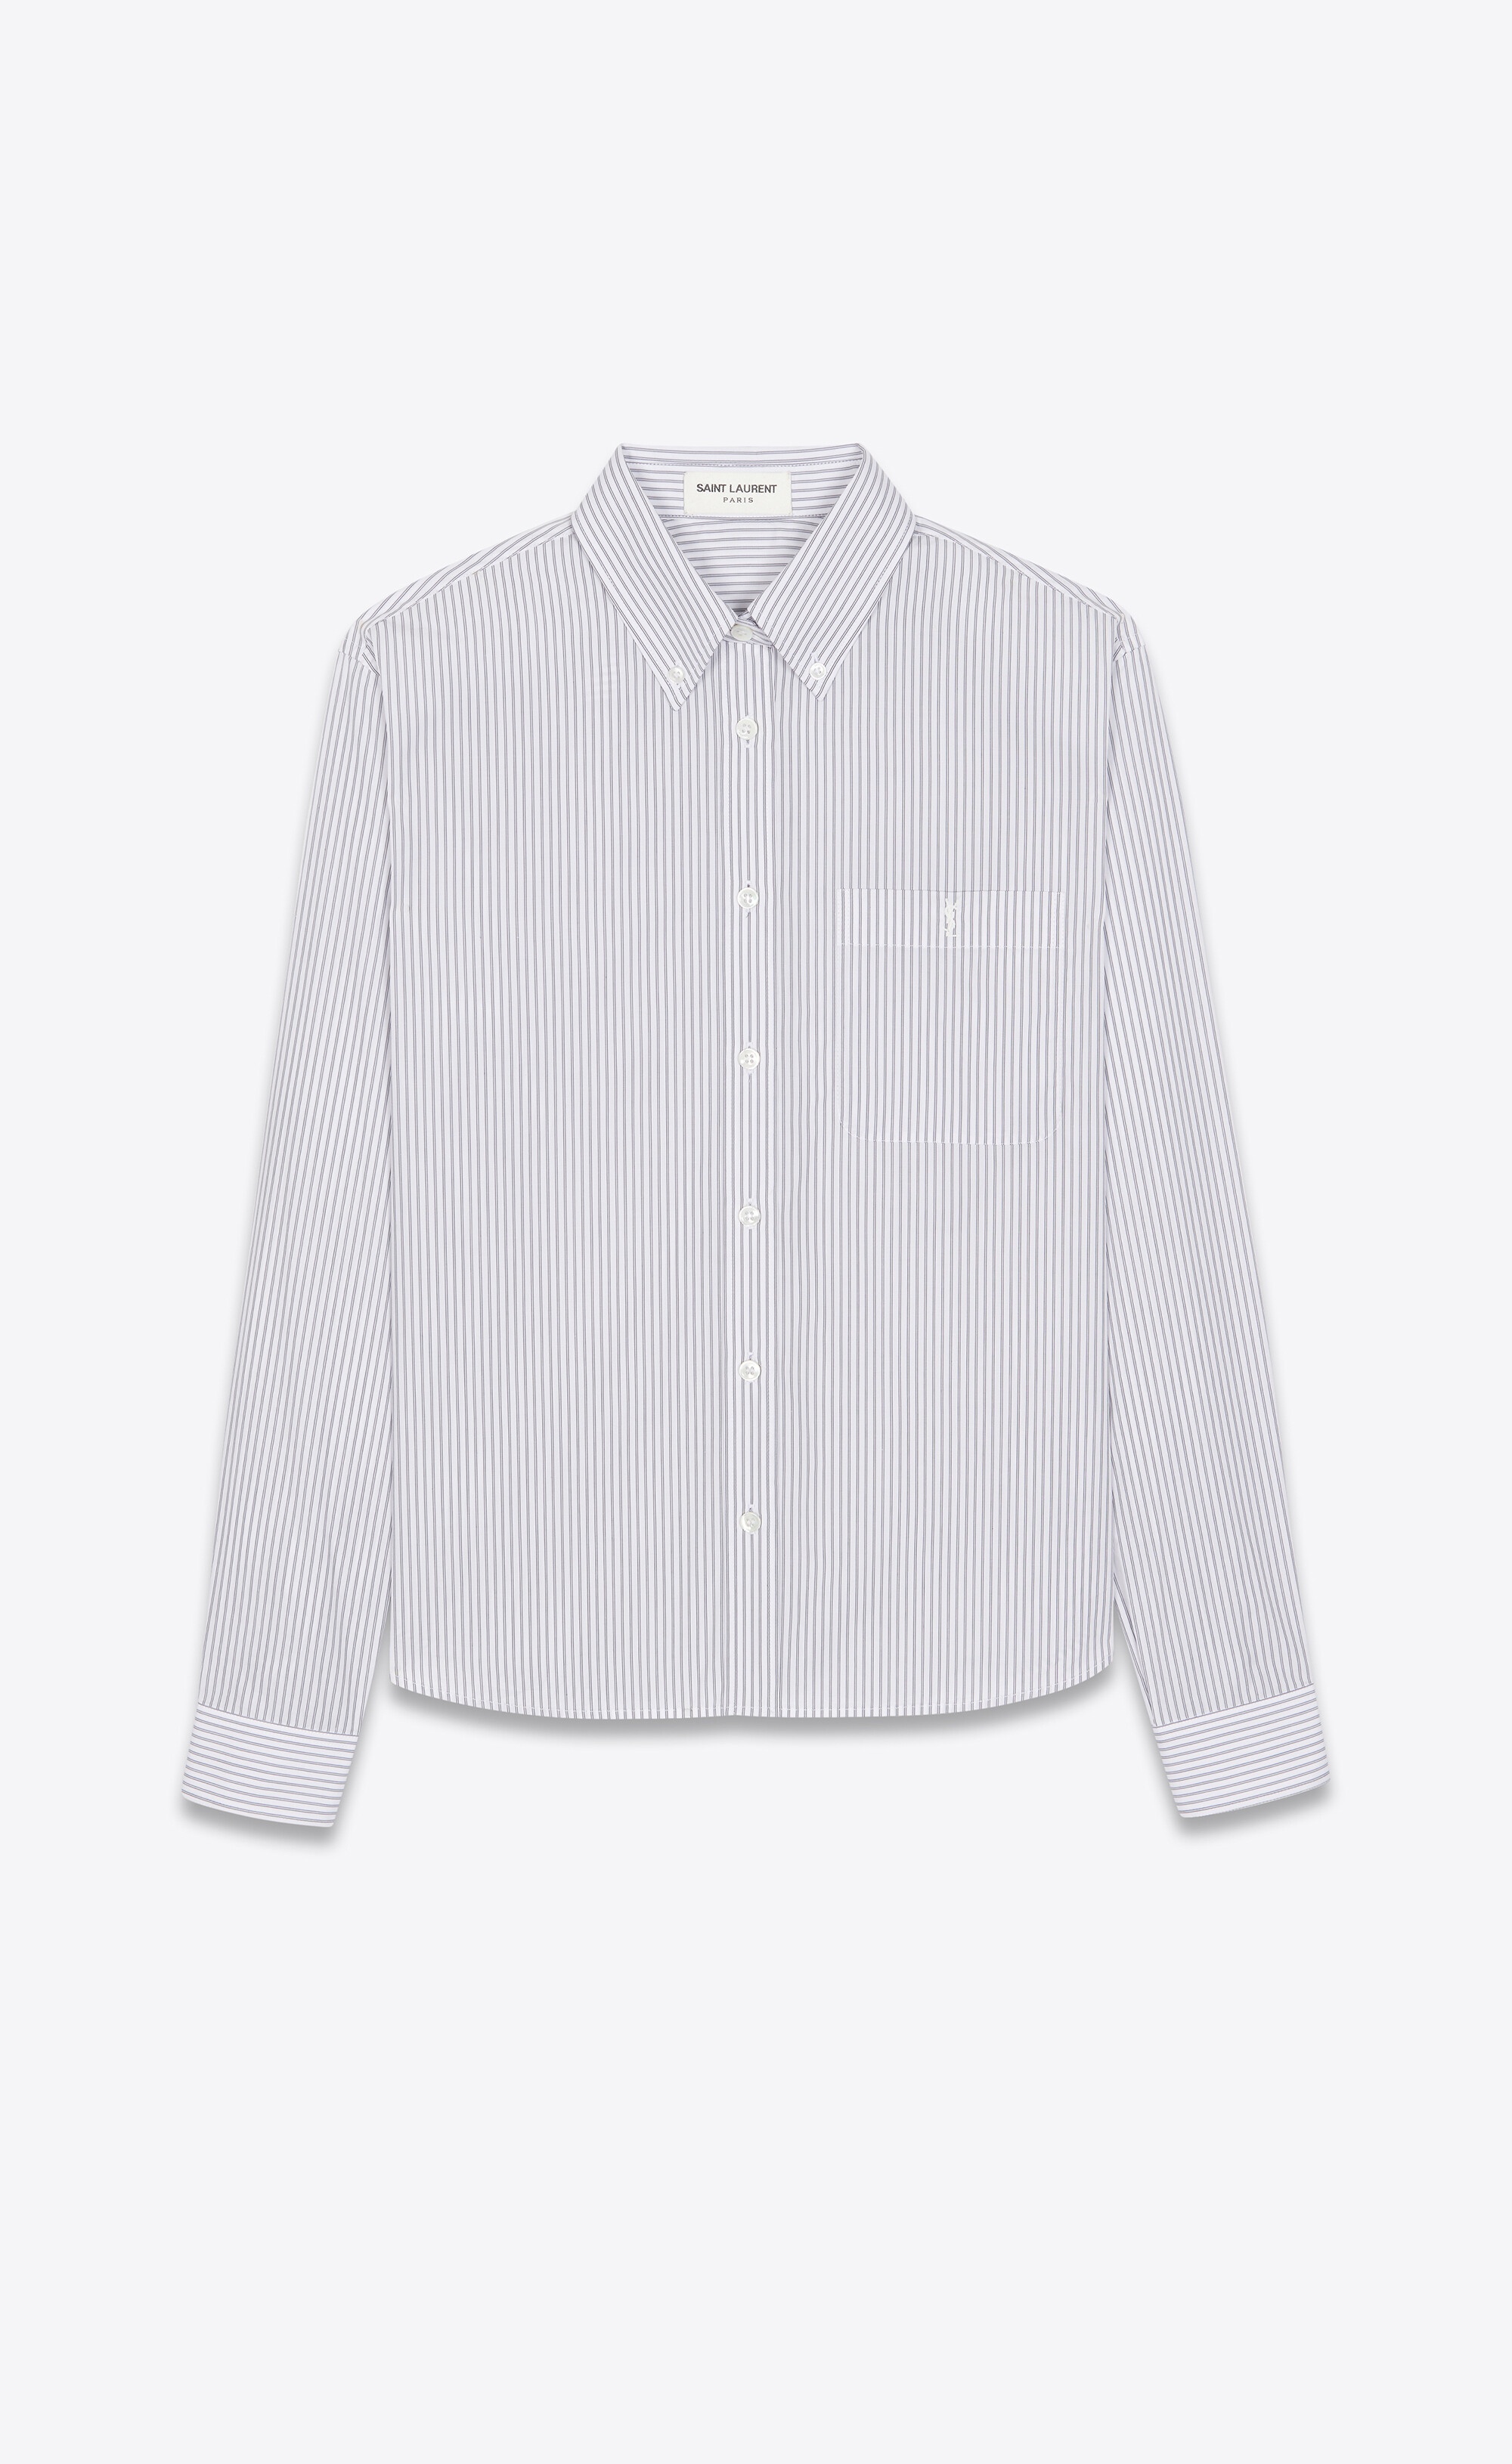 monogram shirt in striped cotton - 1